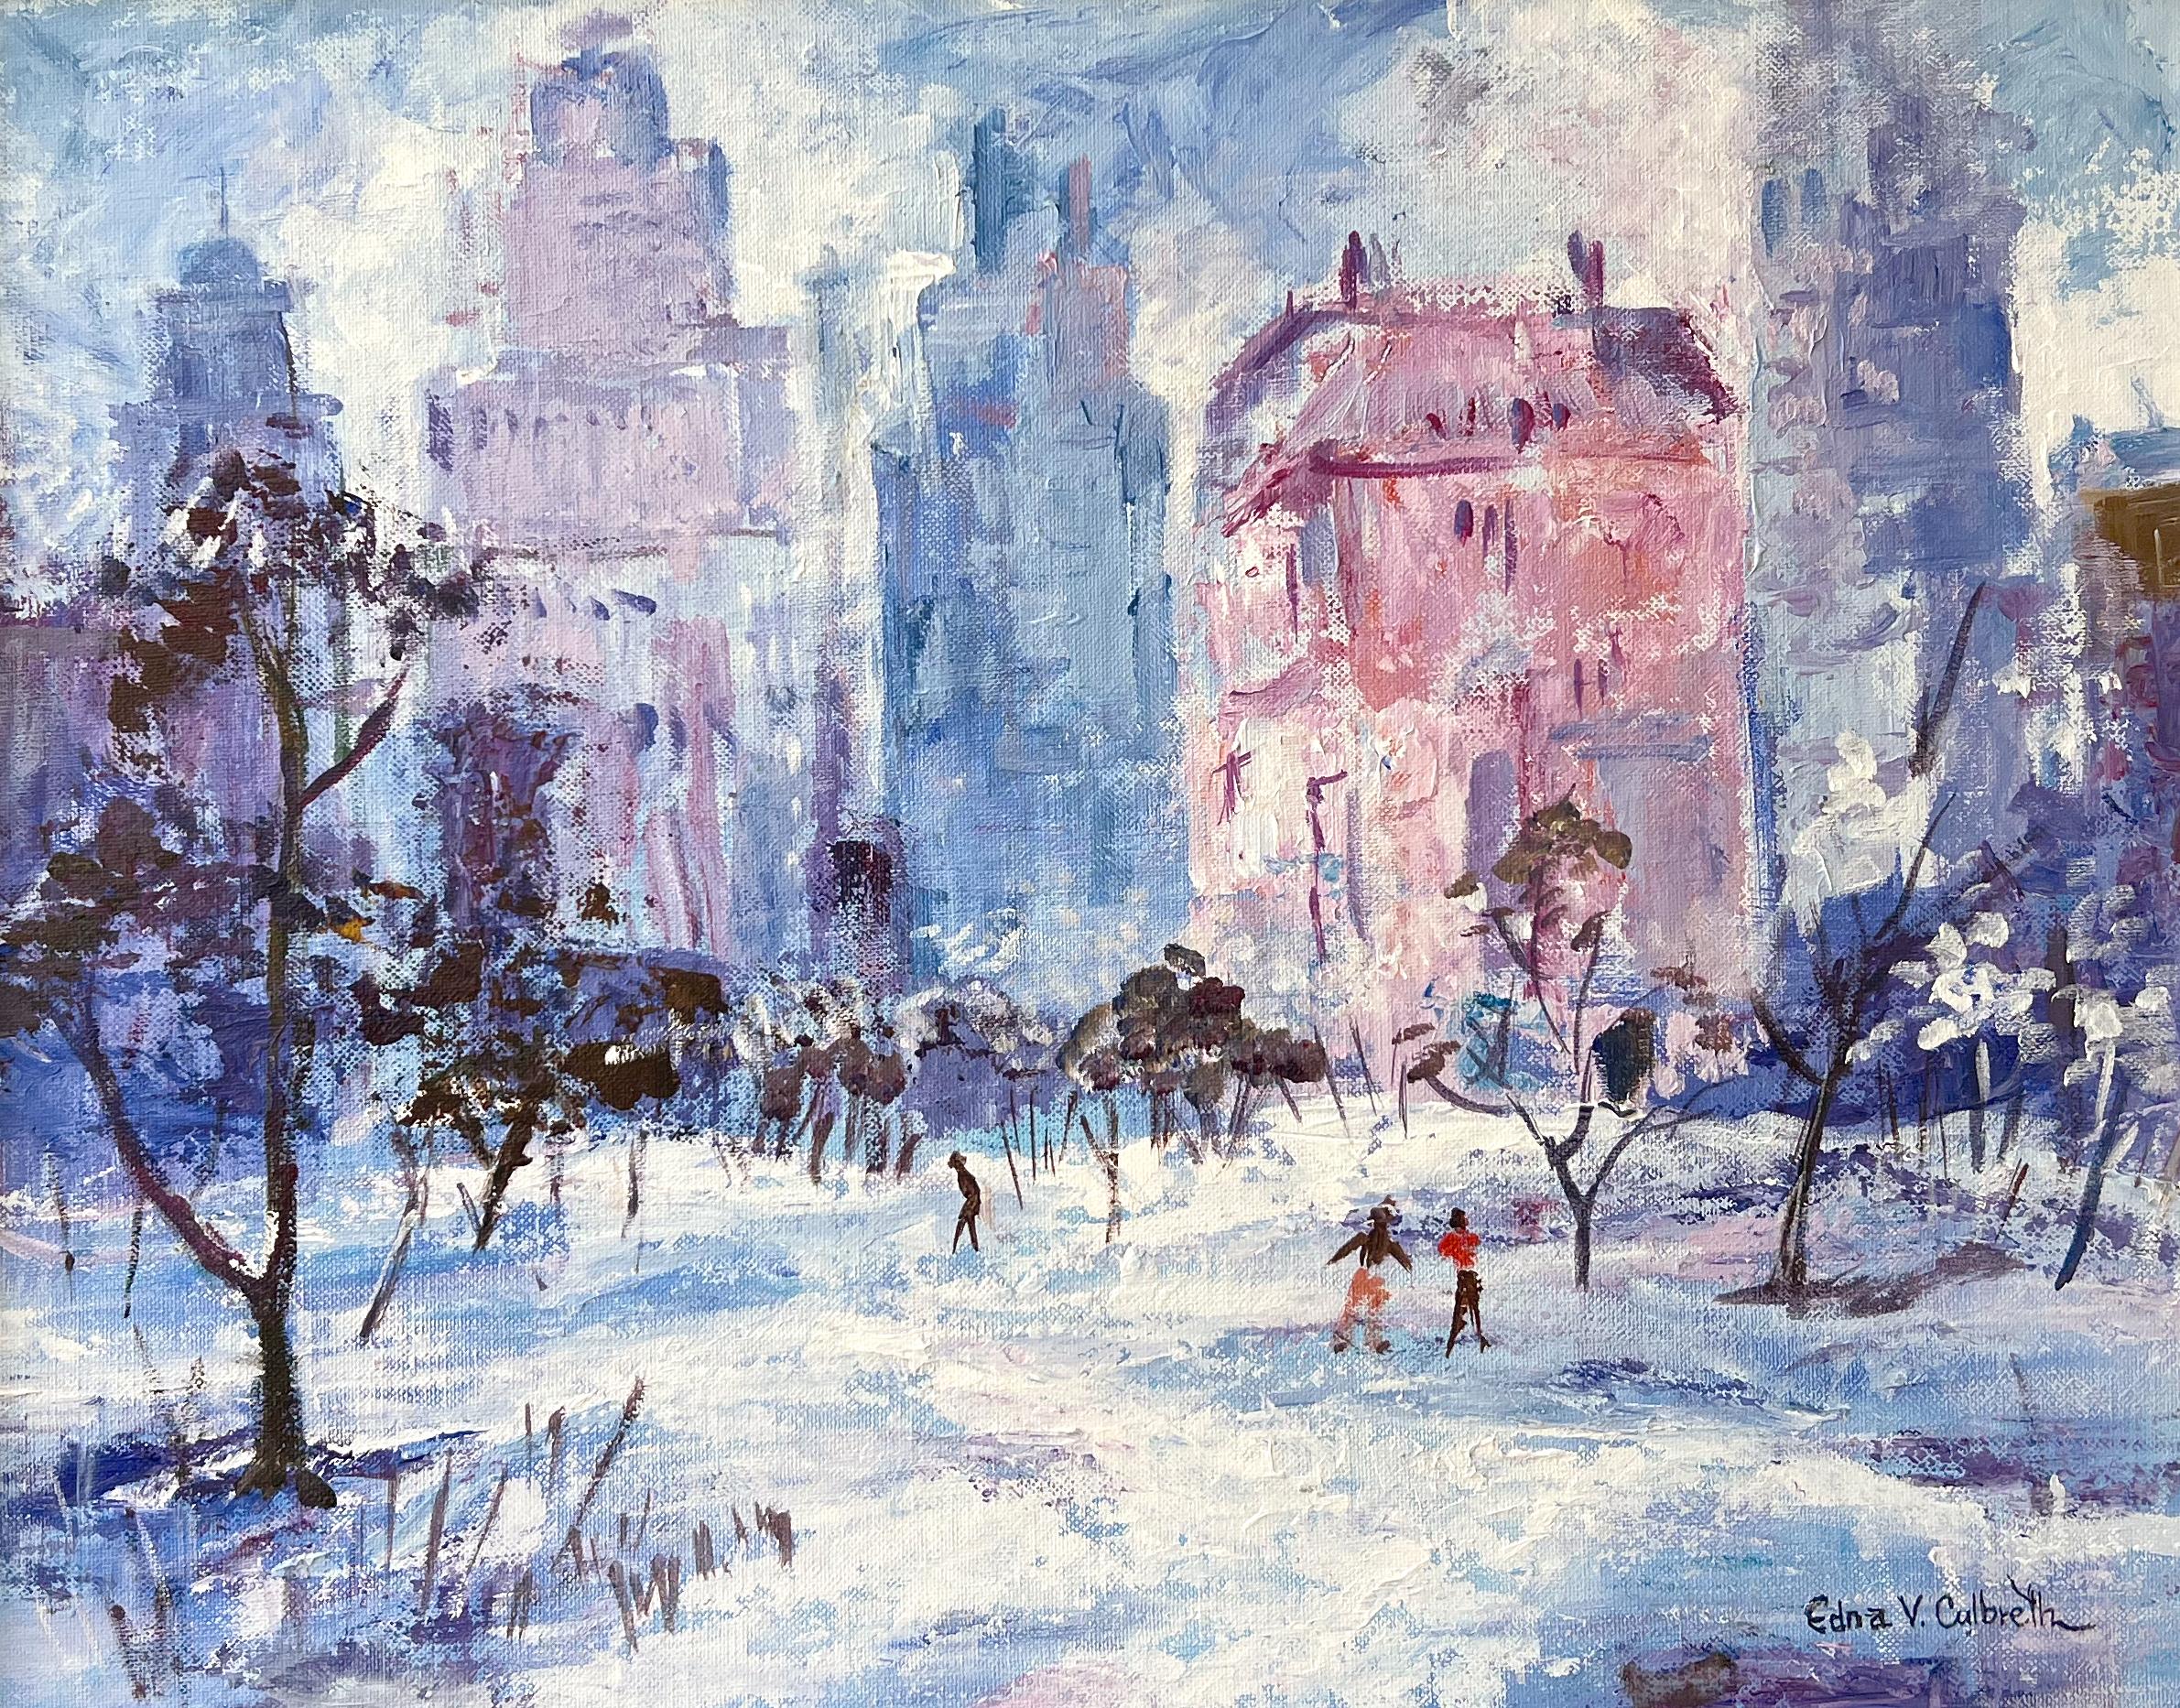 Edna V. Culbreth Landscape Painting - Central Park, New York City, Winter, Snow, Skating, Mid-Century, Oil